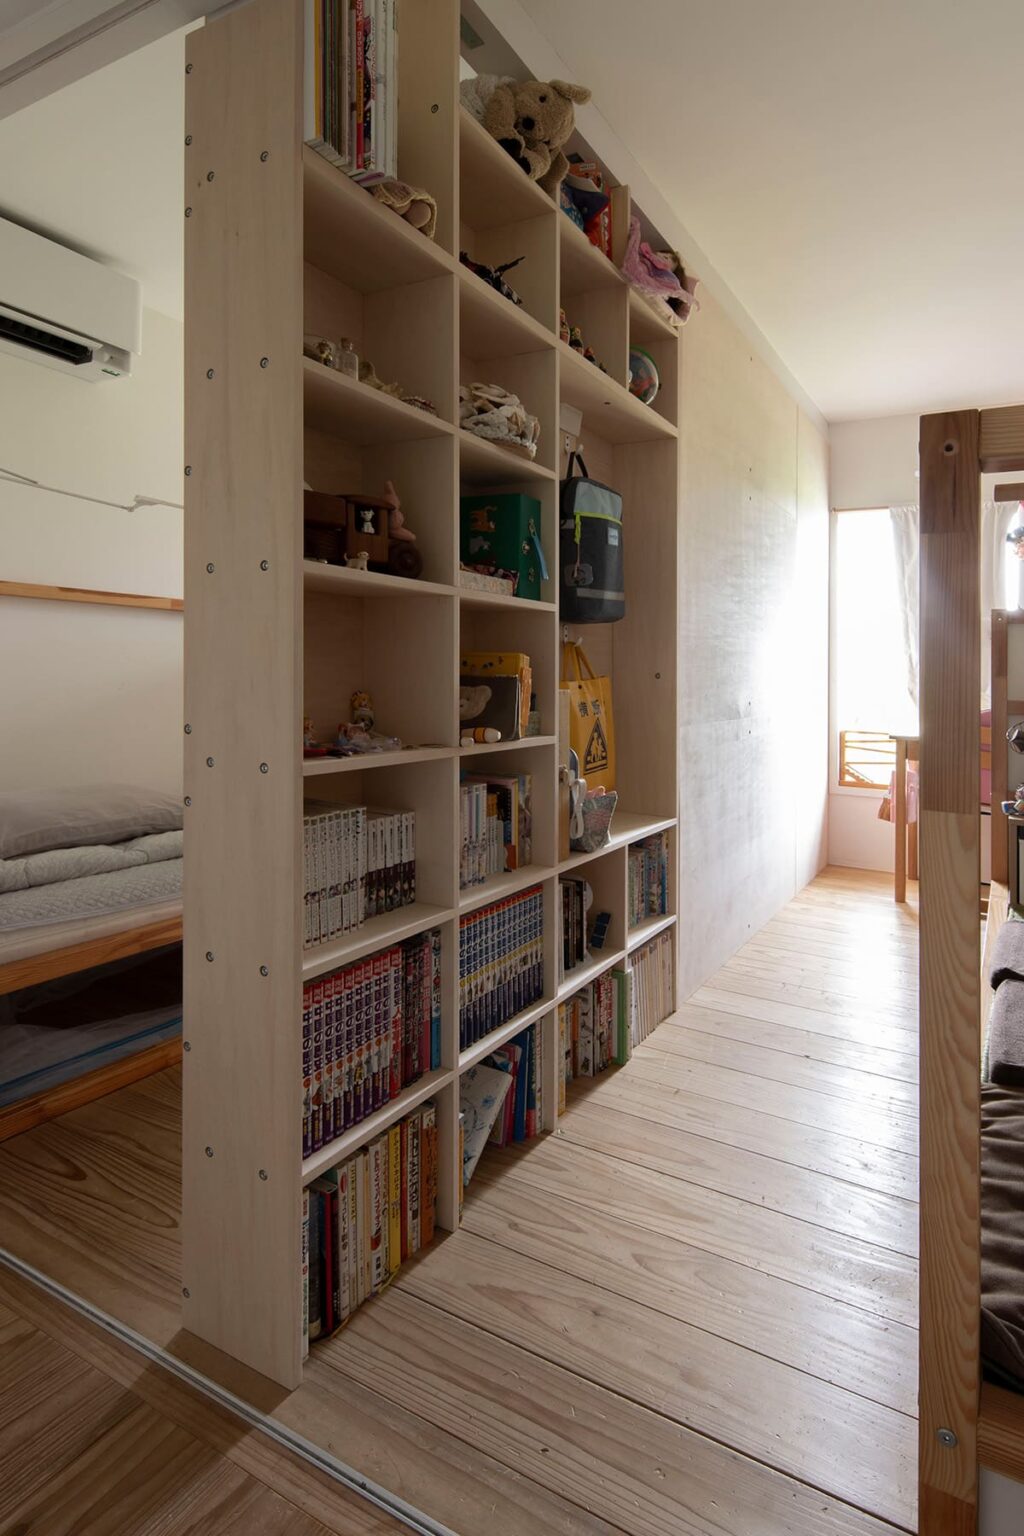 【File 760】本棚の間仕切りで子供室を作る - Shelf 壁一面の本棚 - マルゲリータお客様事例